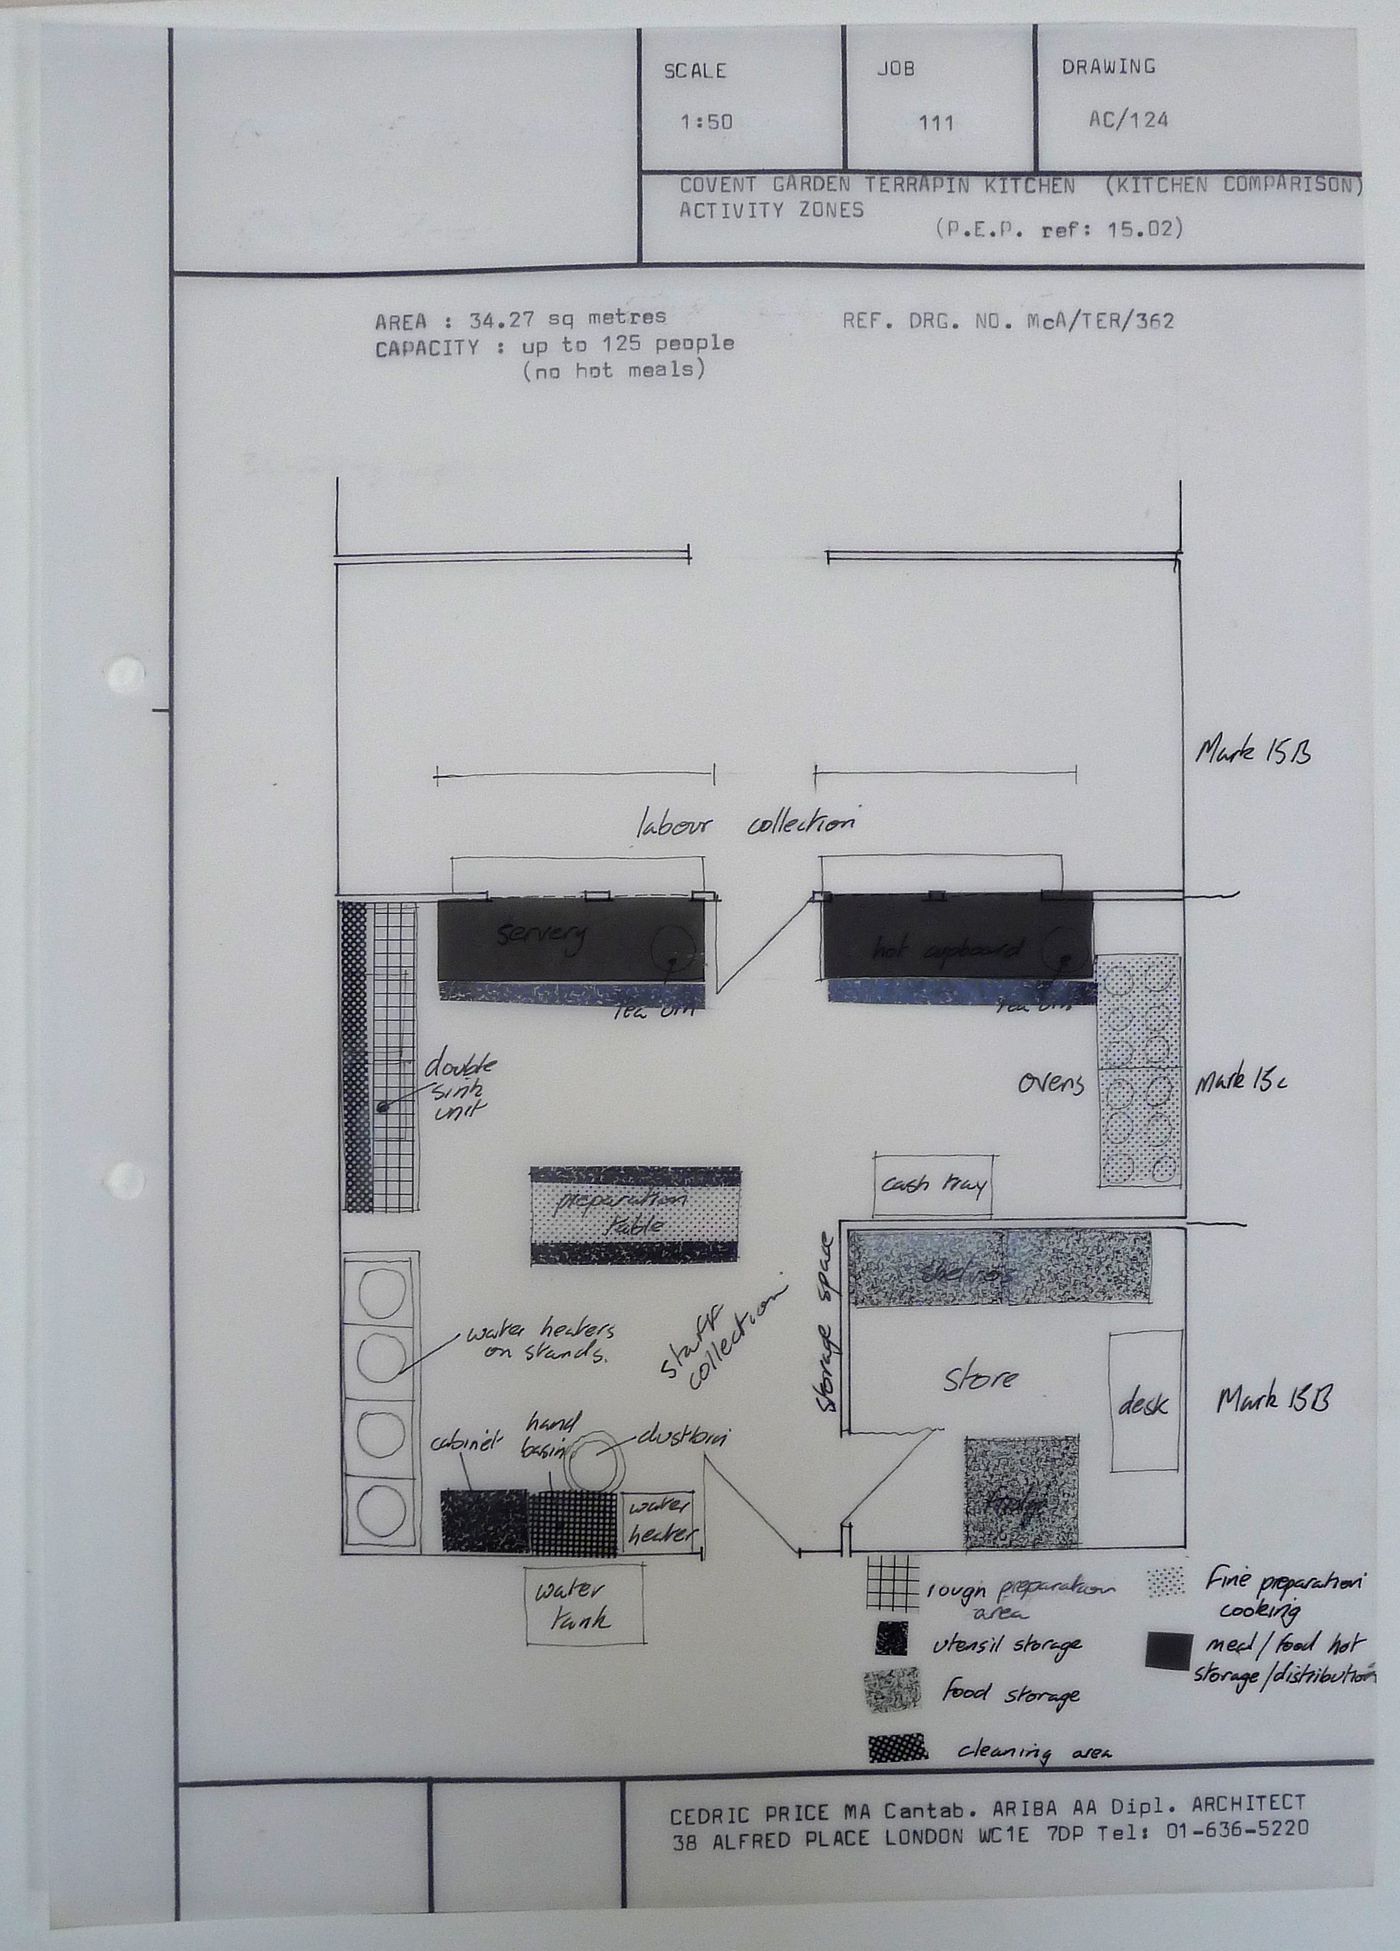 McAppy: diagram illustrating Covent Garden terrapin kitchen activity zones